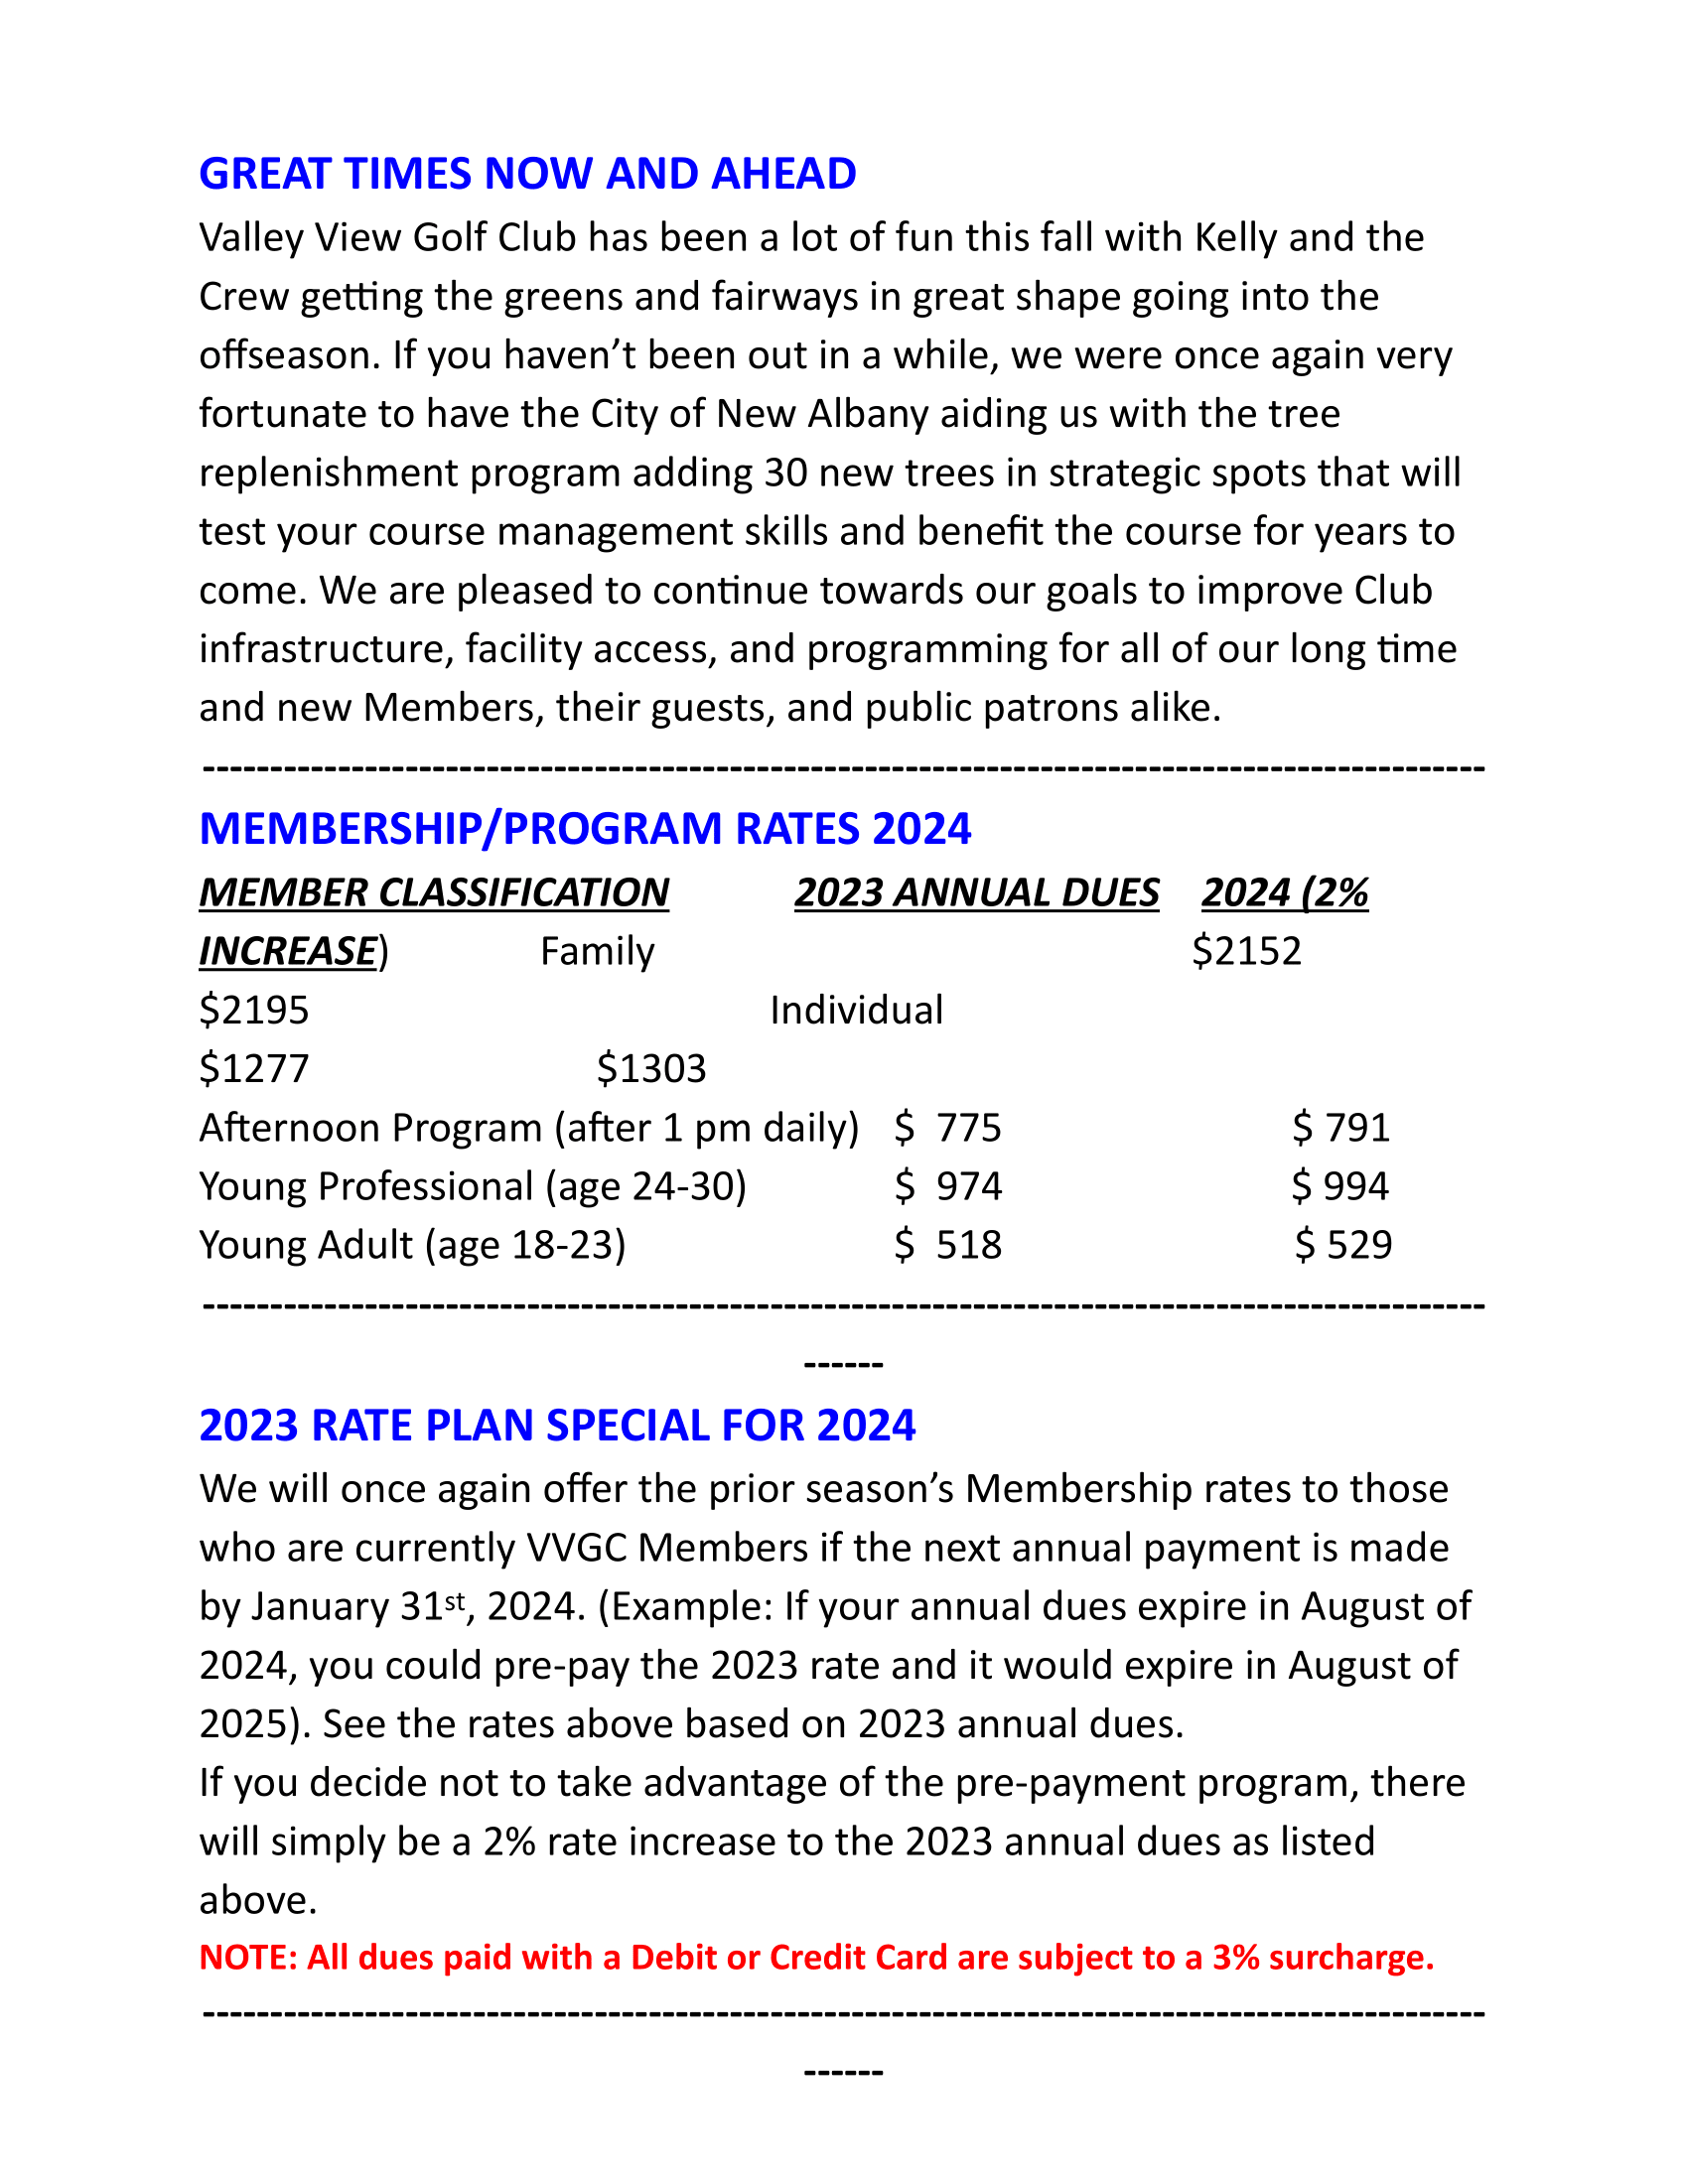 REVISED VV EMAIL TO MEMBERSHIP DECEMBER 2023 1 1